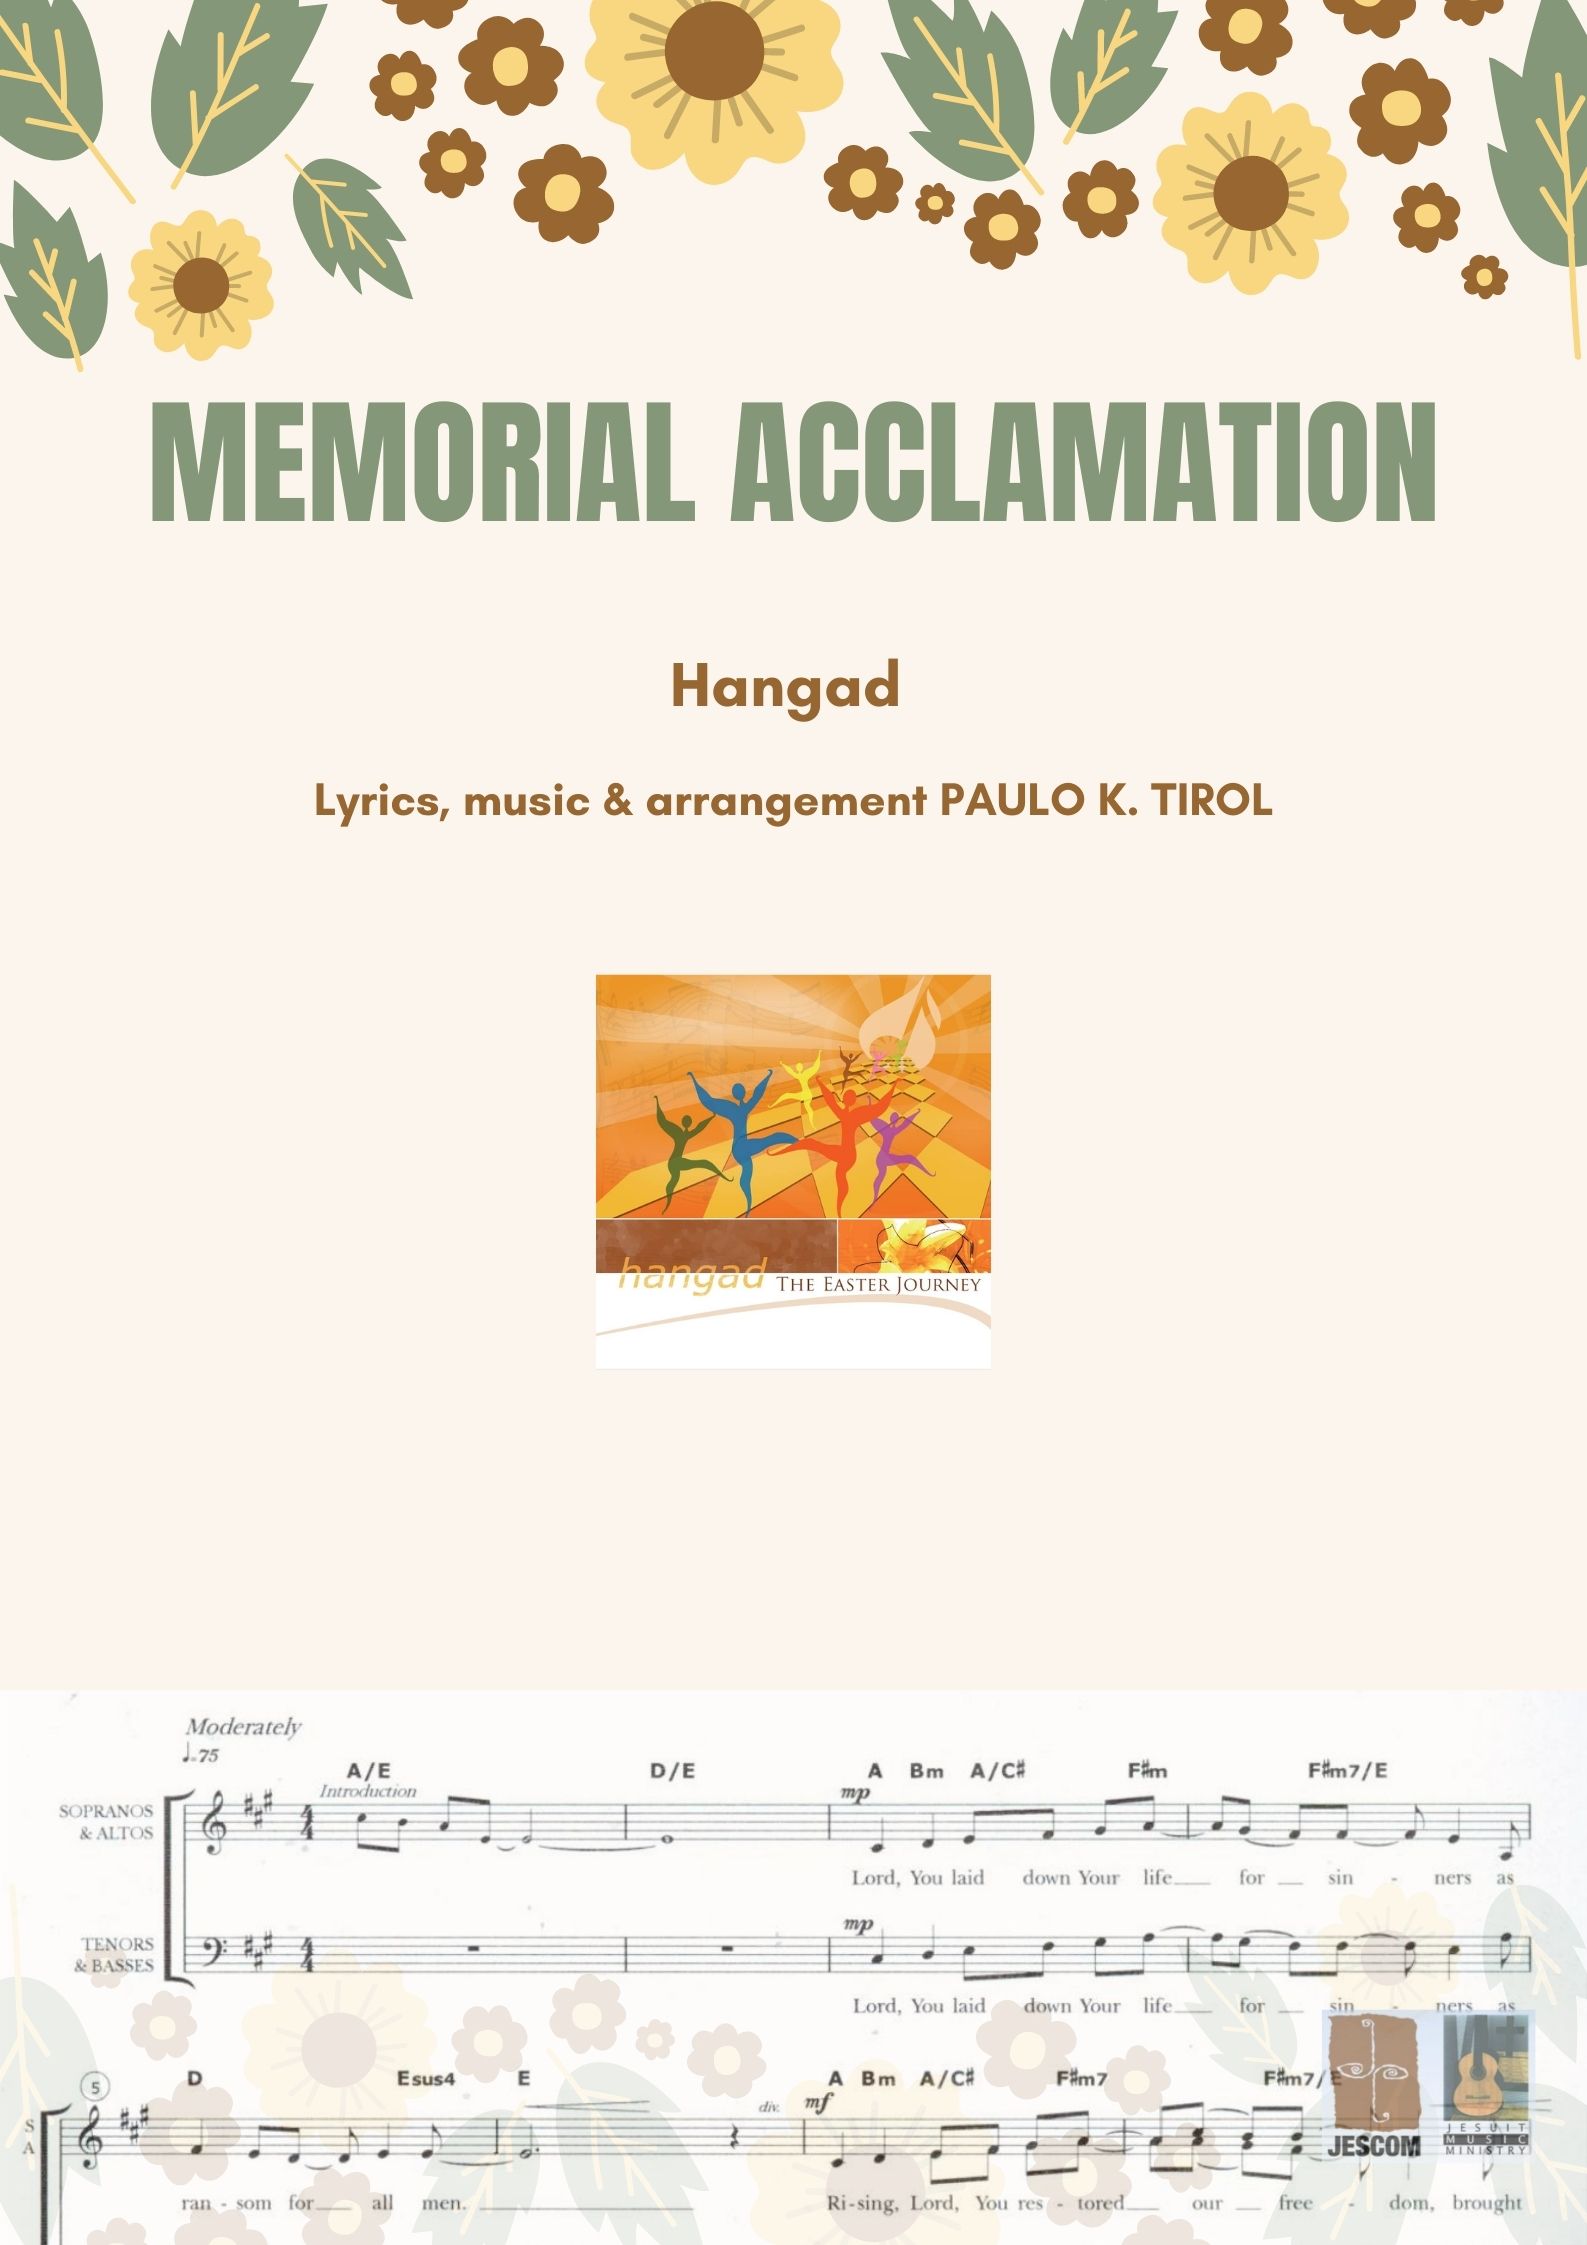 MEMORIAL ACCLAMATION by Tirol – Music Sheet